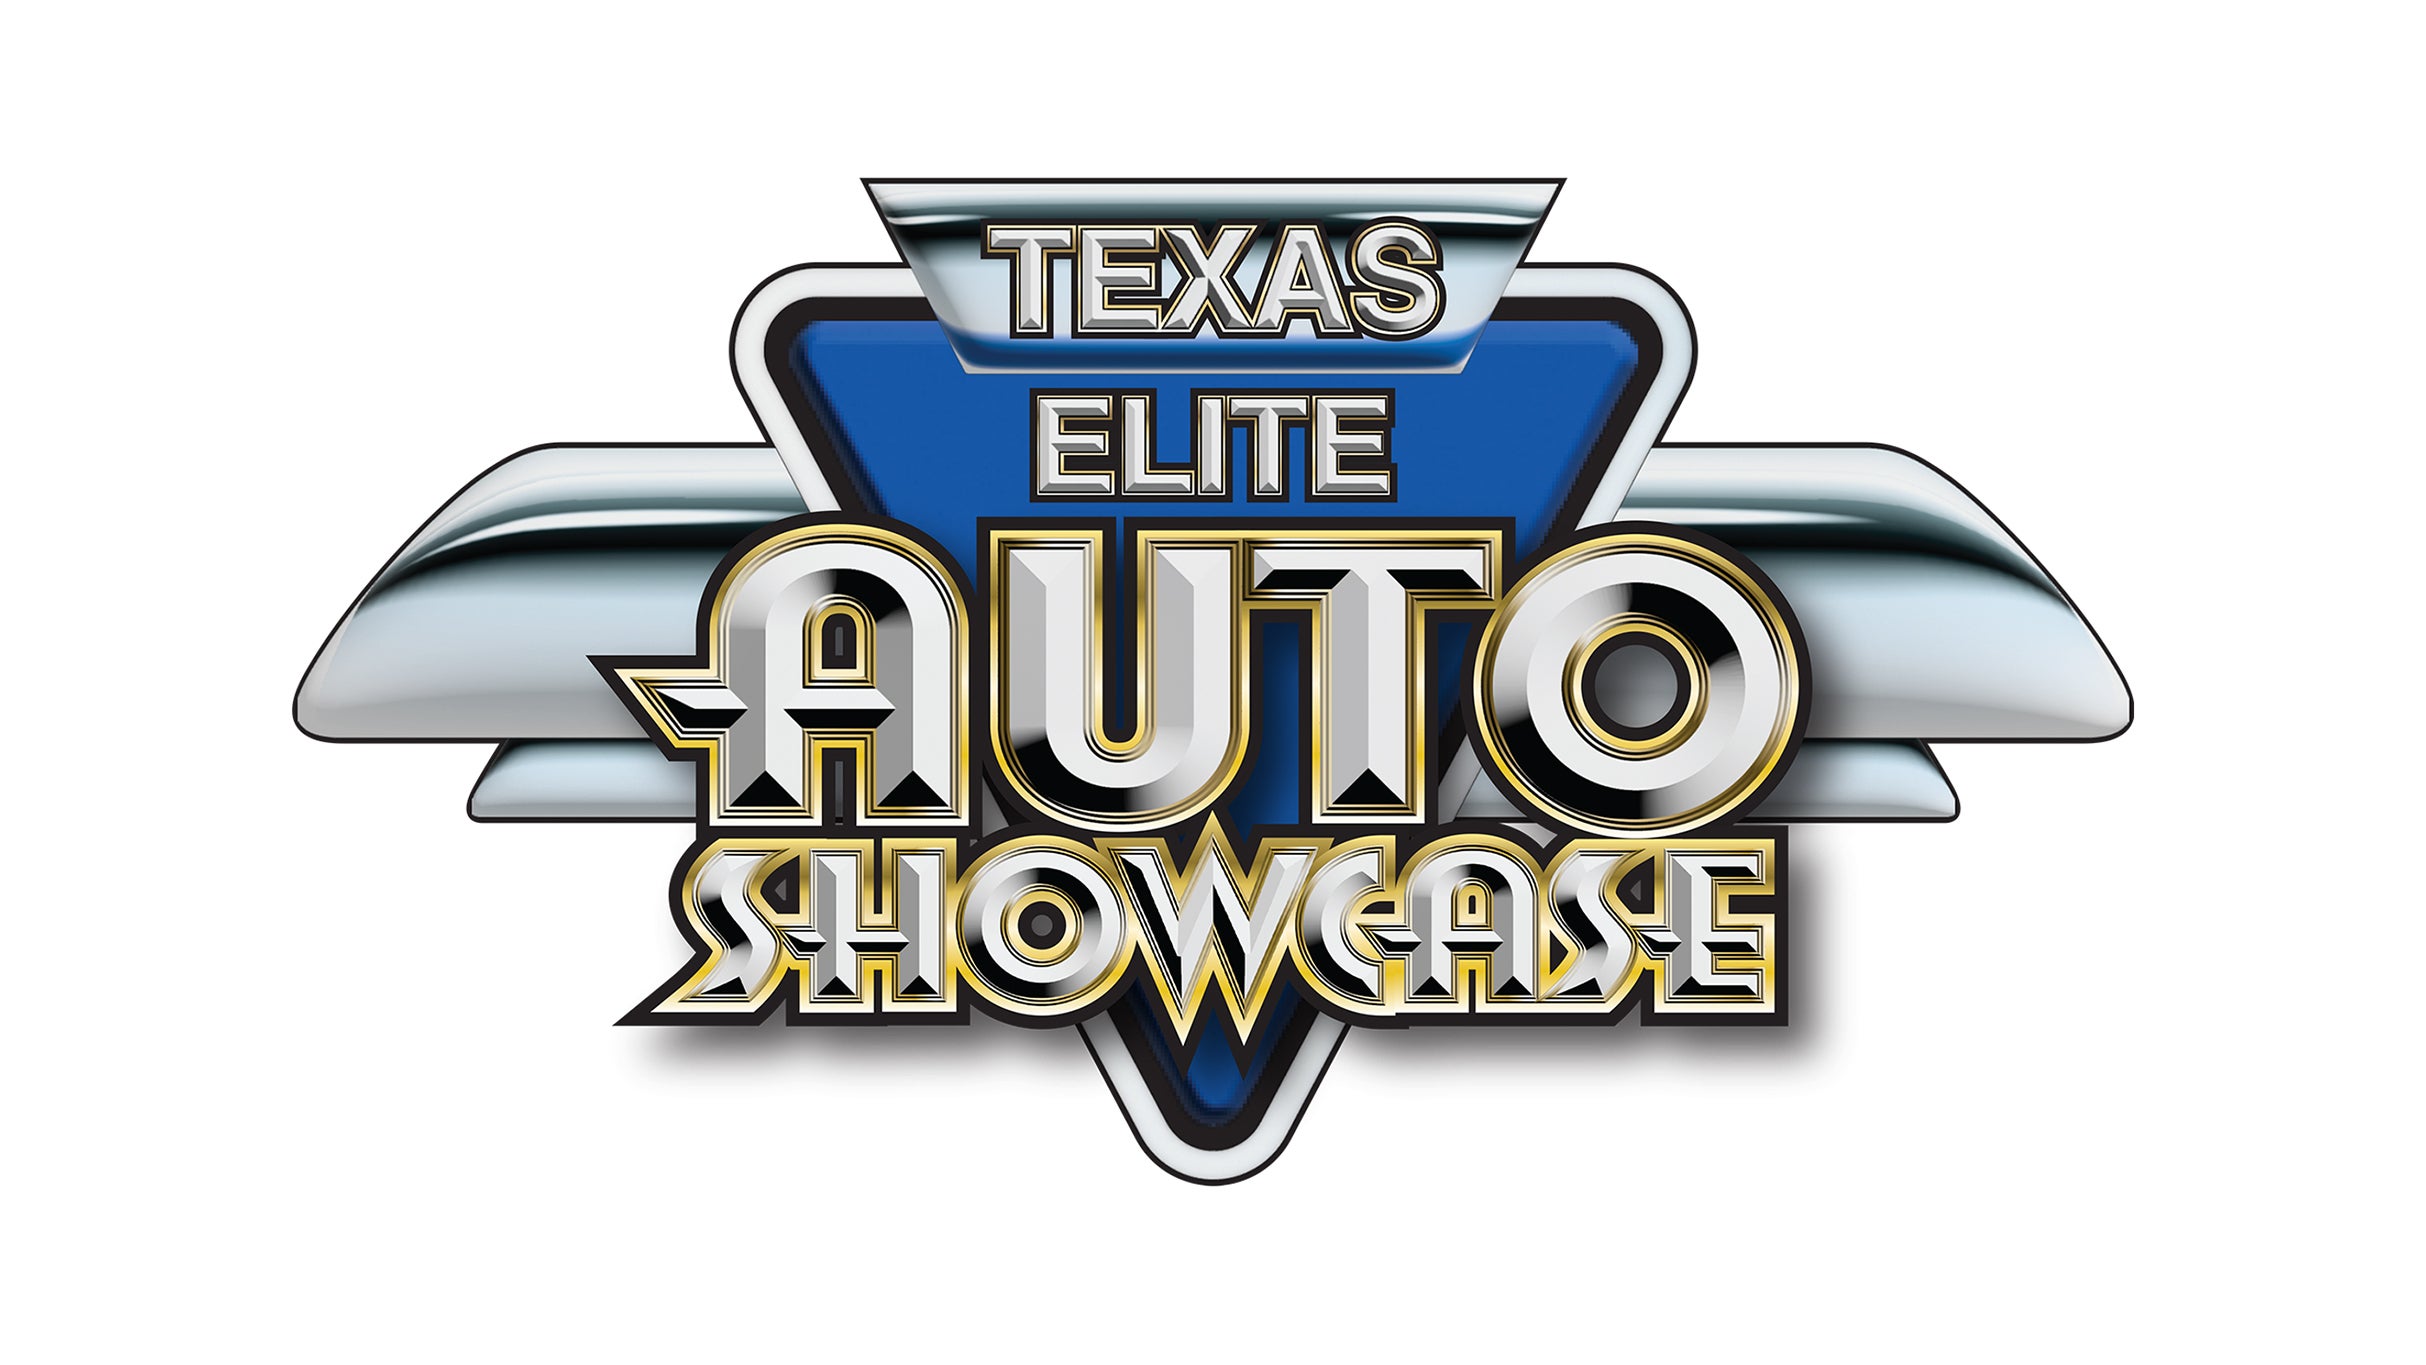 Texas Elite Auto Showcase presale information on freepresalepasswords.com